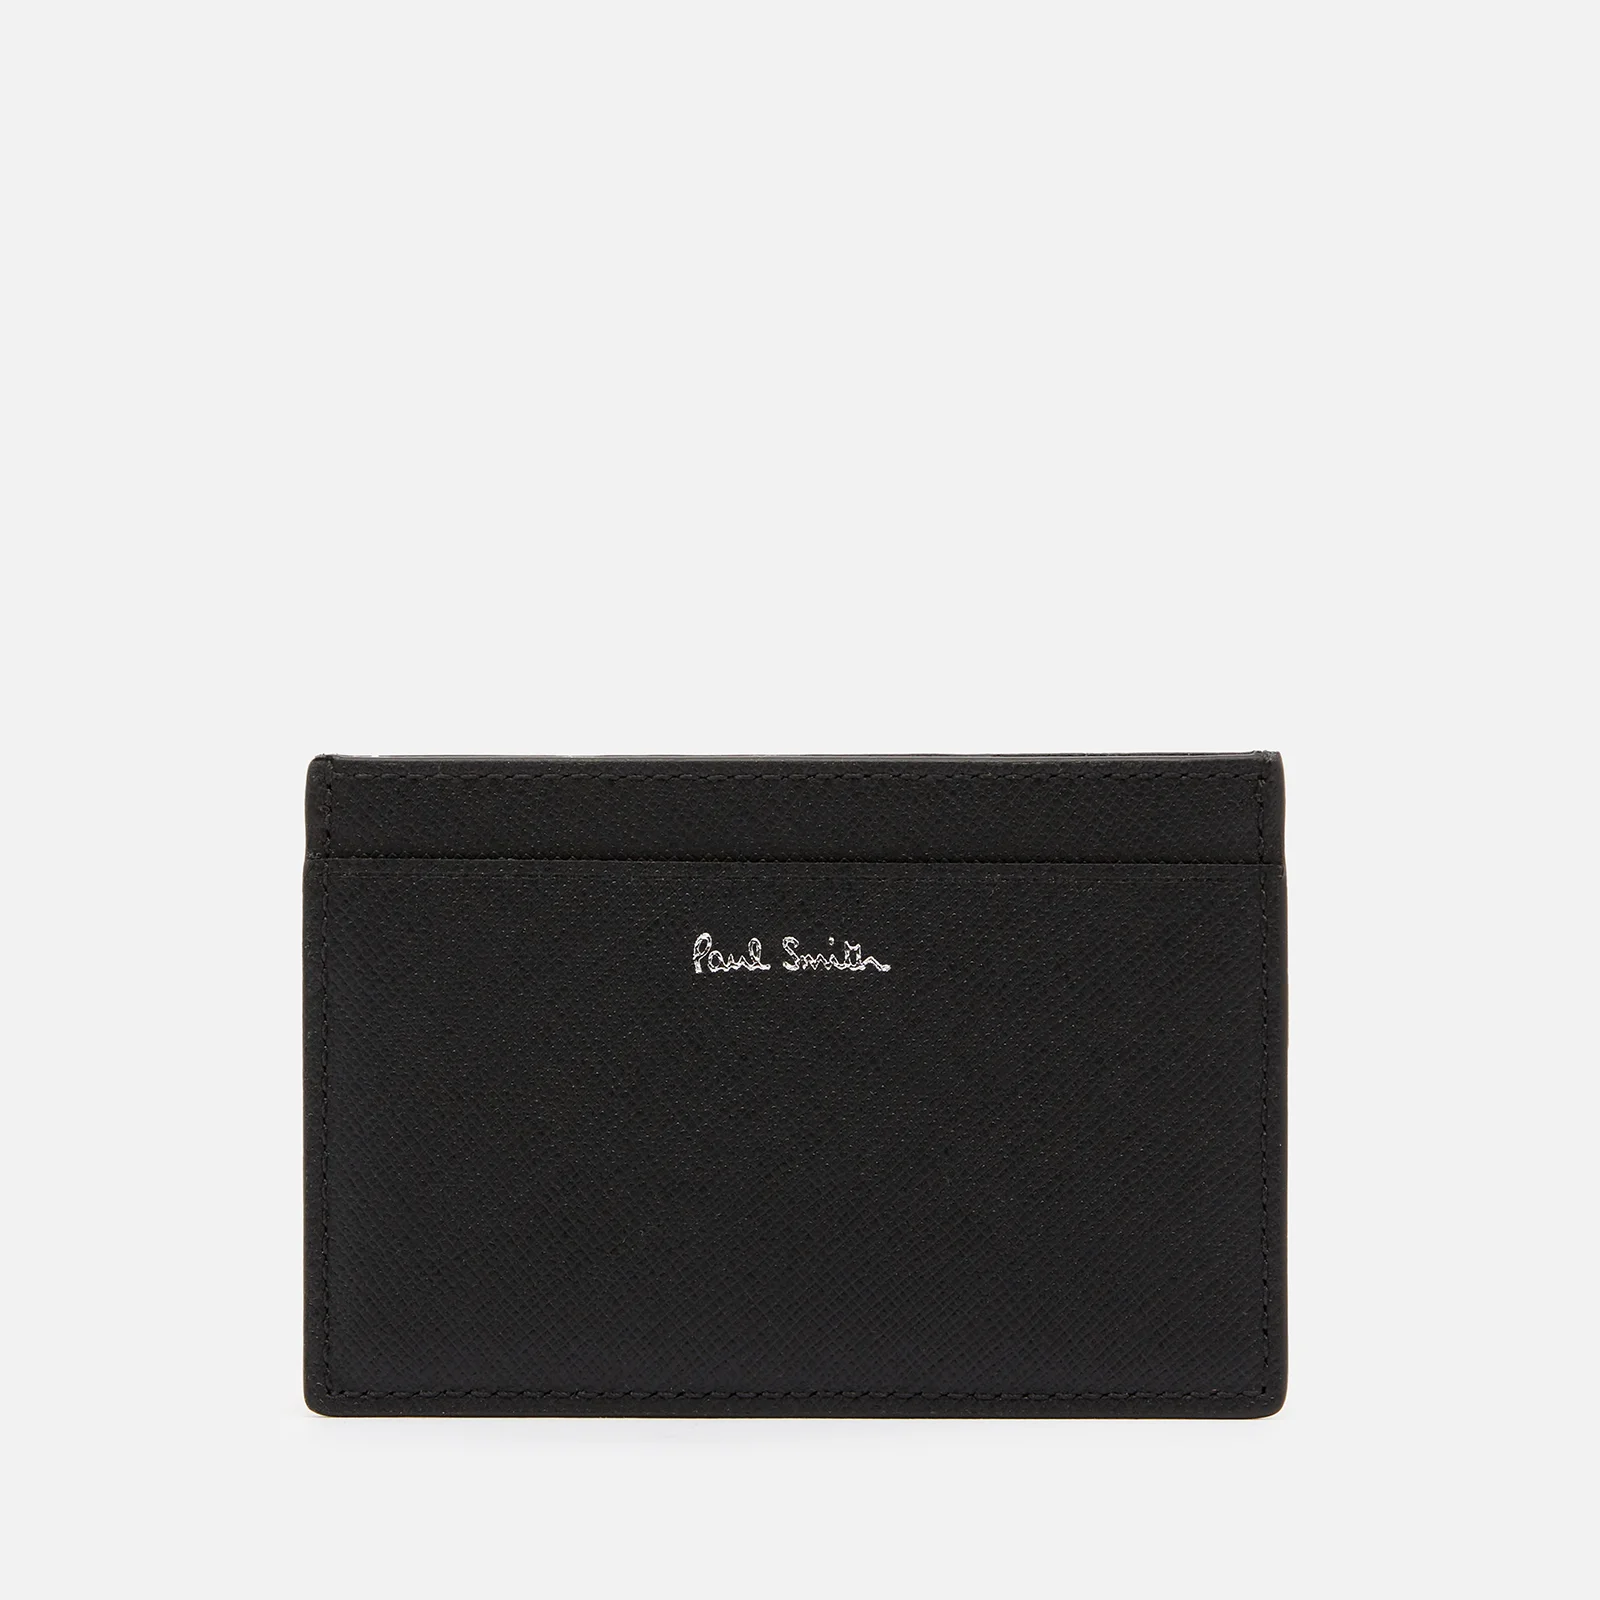 PS Paul Smith Men's Leather Mini Print Credit Card Holder - Black Image 1